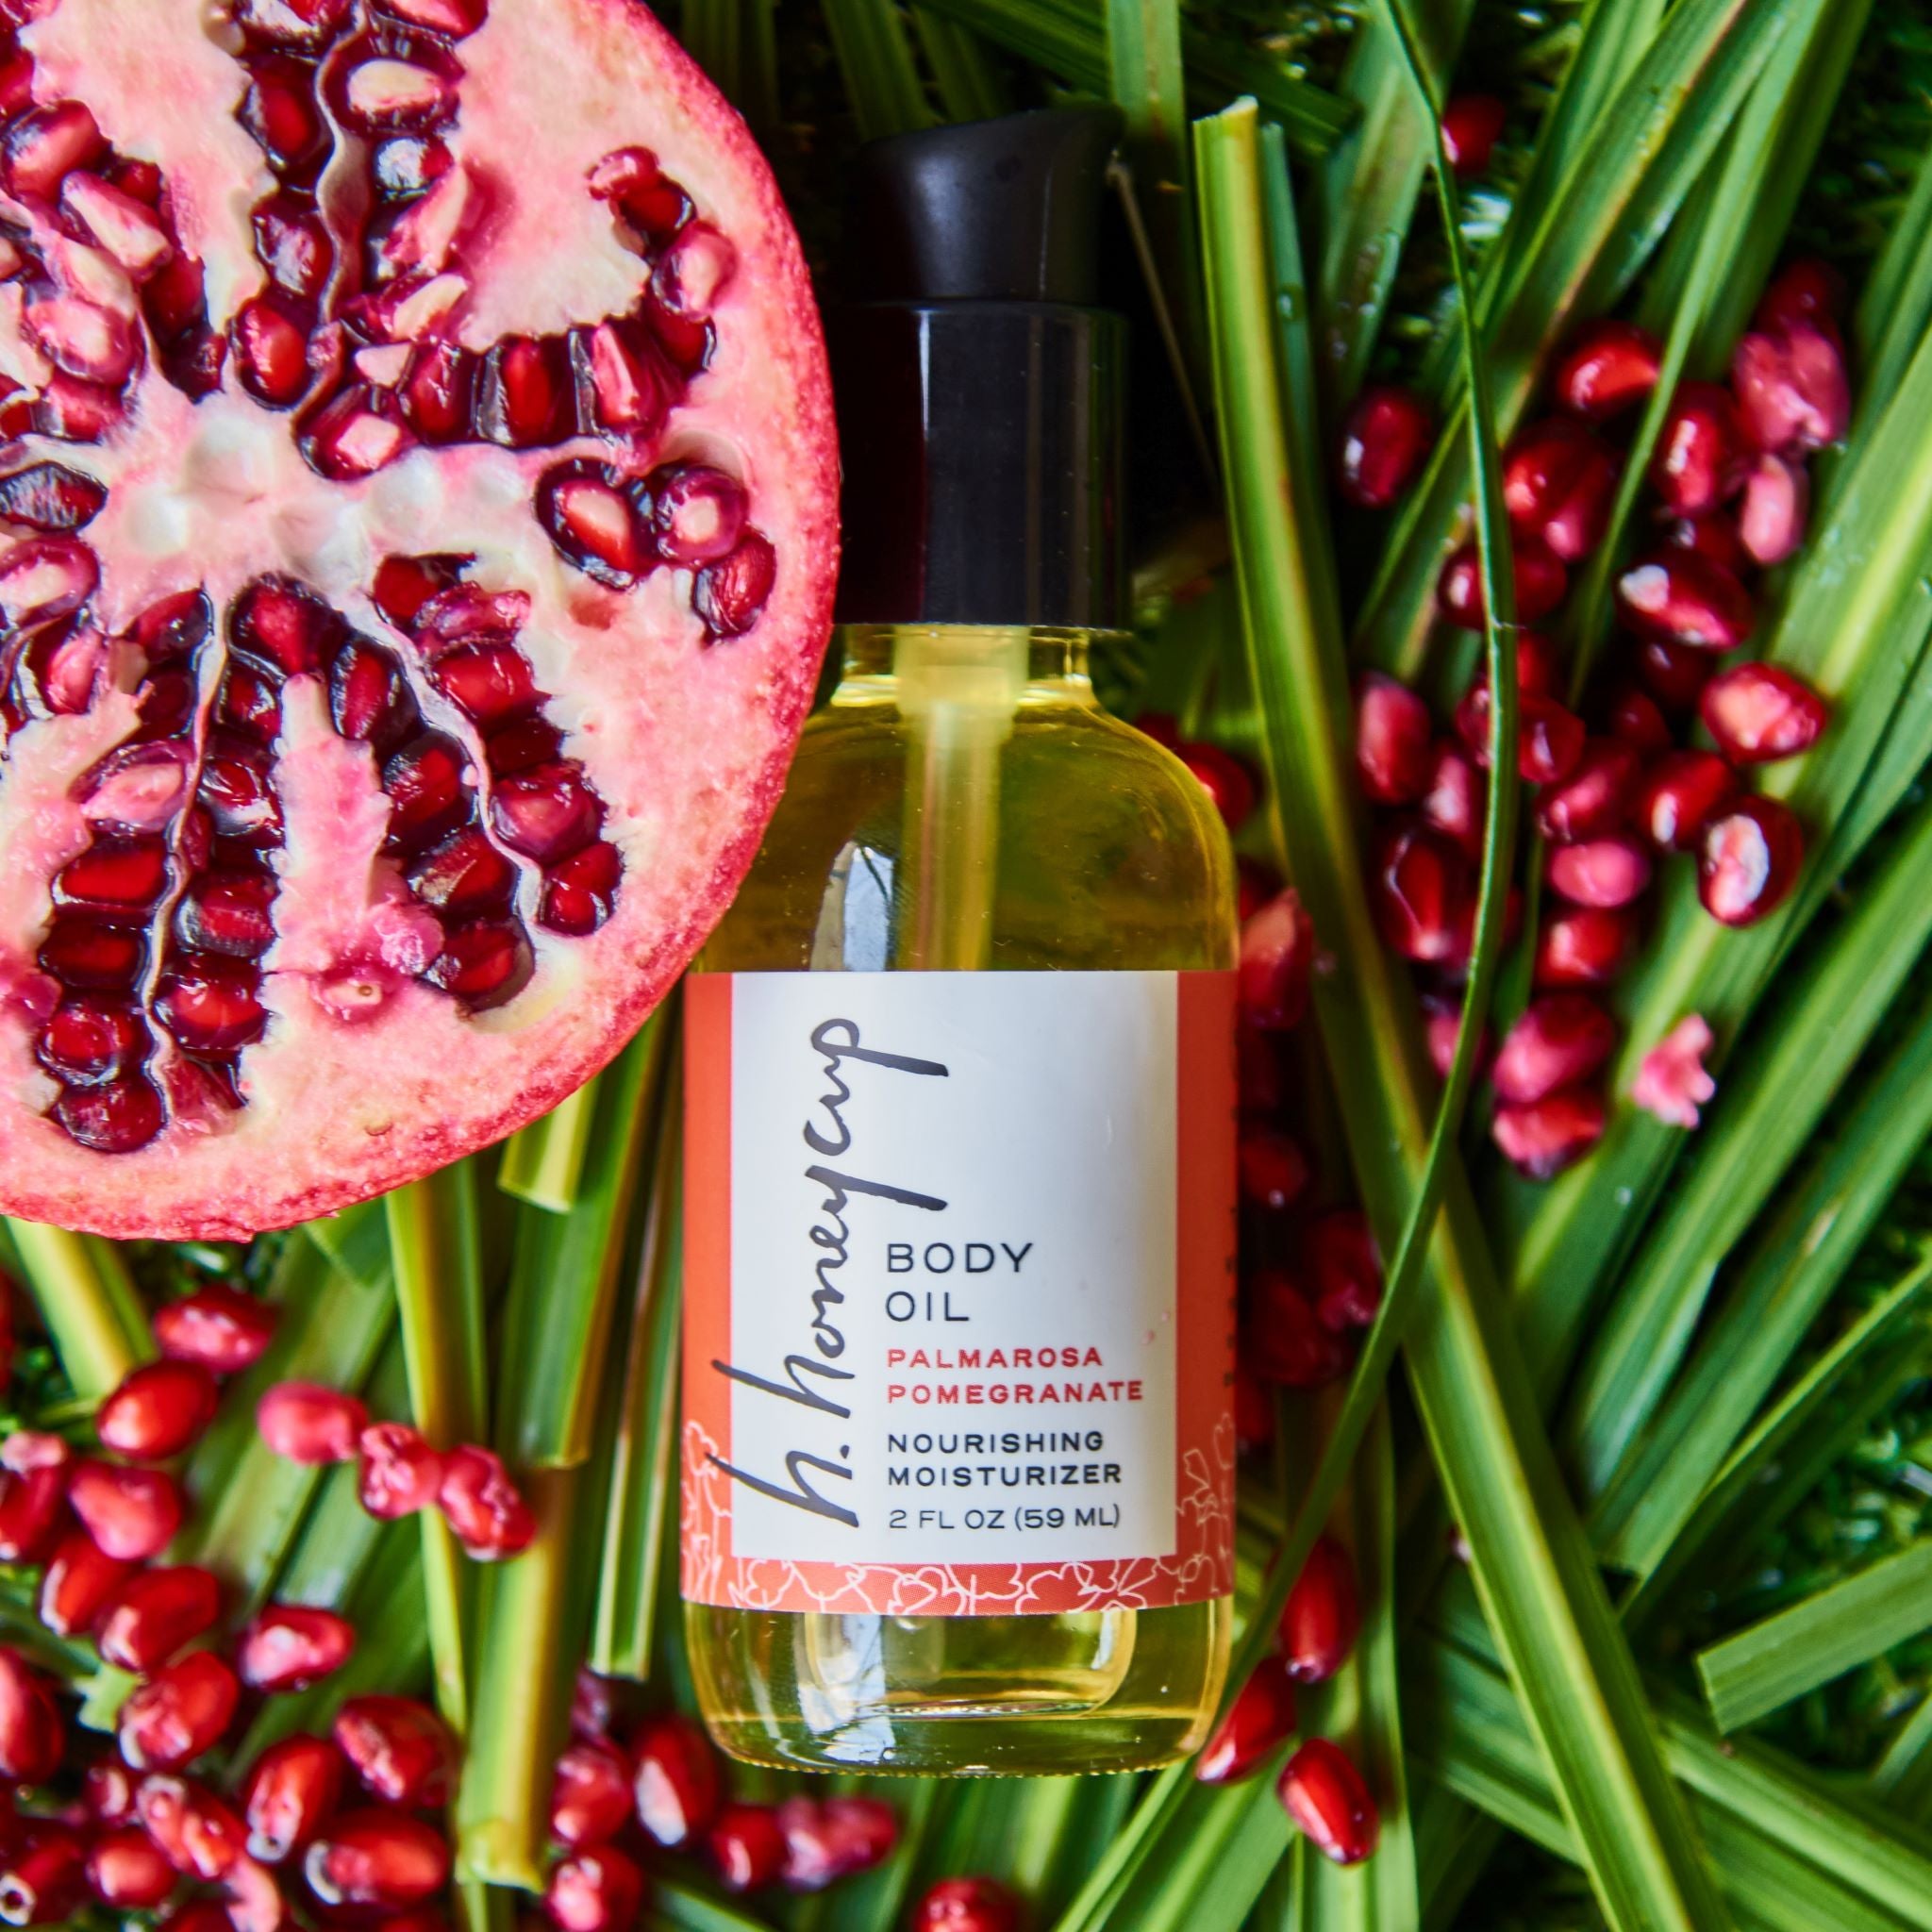 body oil2 with palmarosa and pomegranates